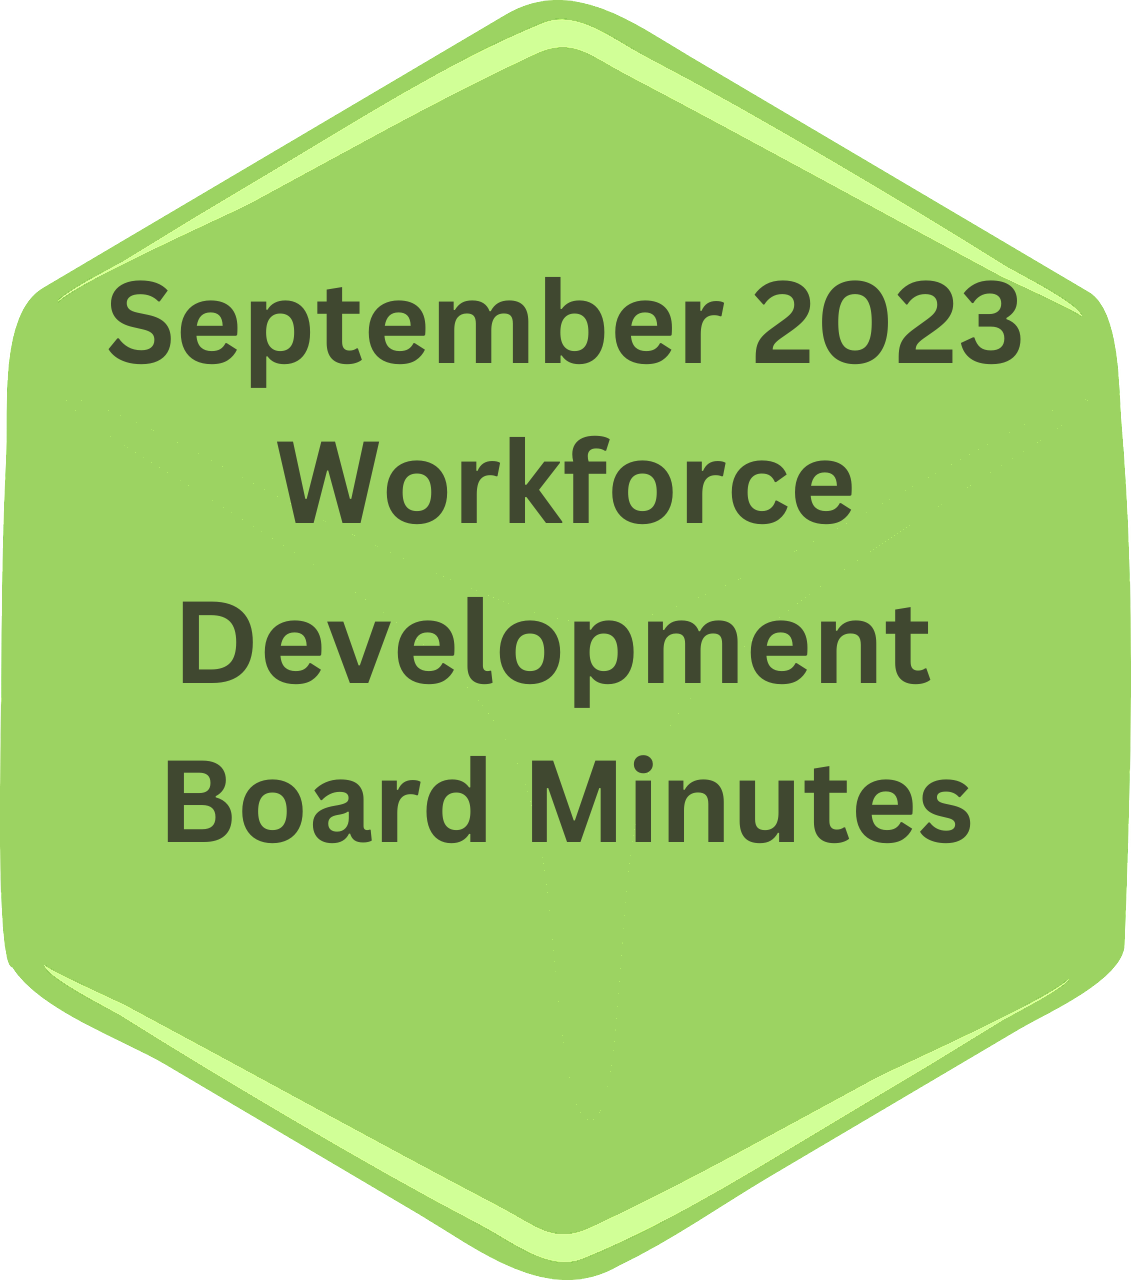 workforce development board meeting minutes September 2023